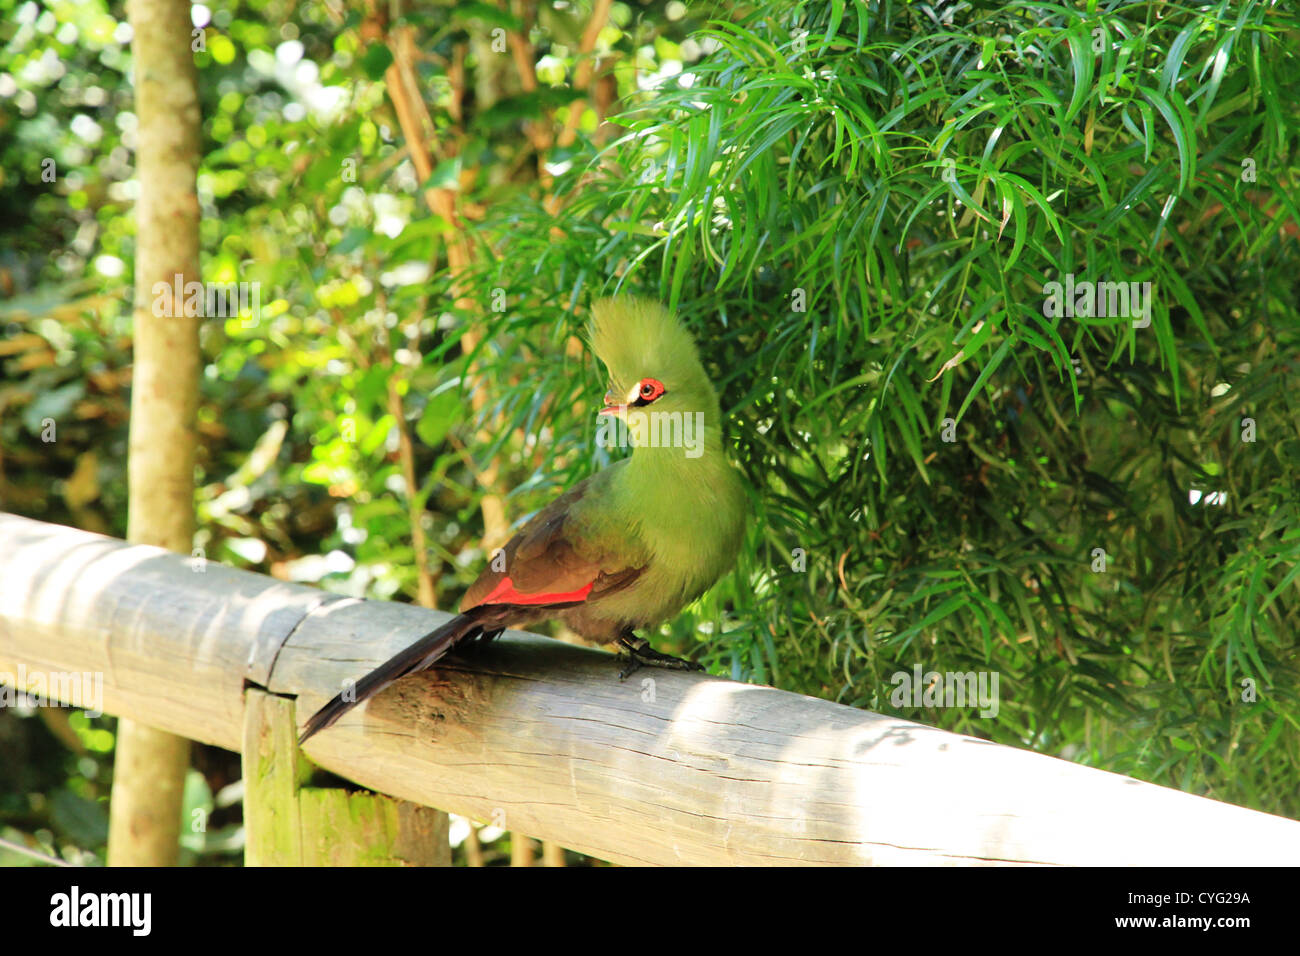 Green bird Stock Photo